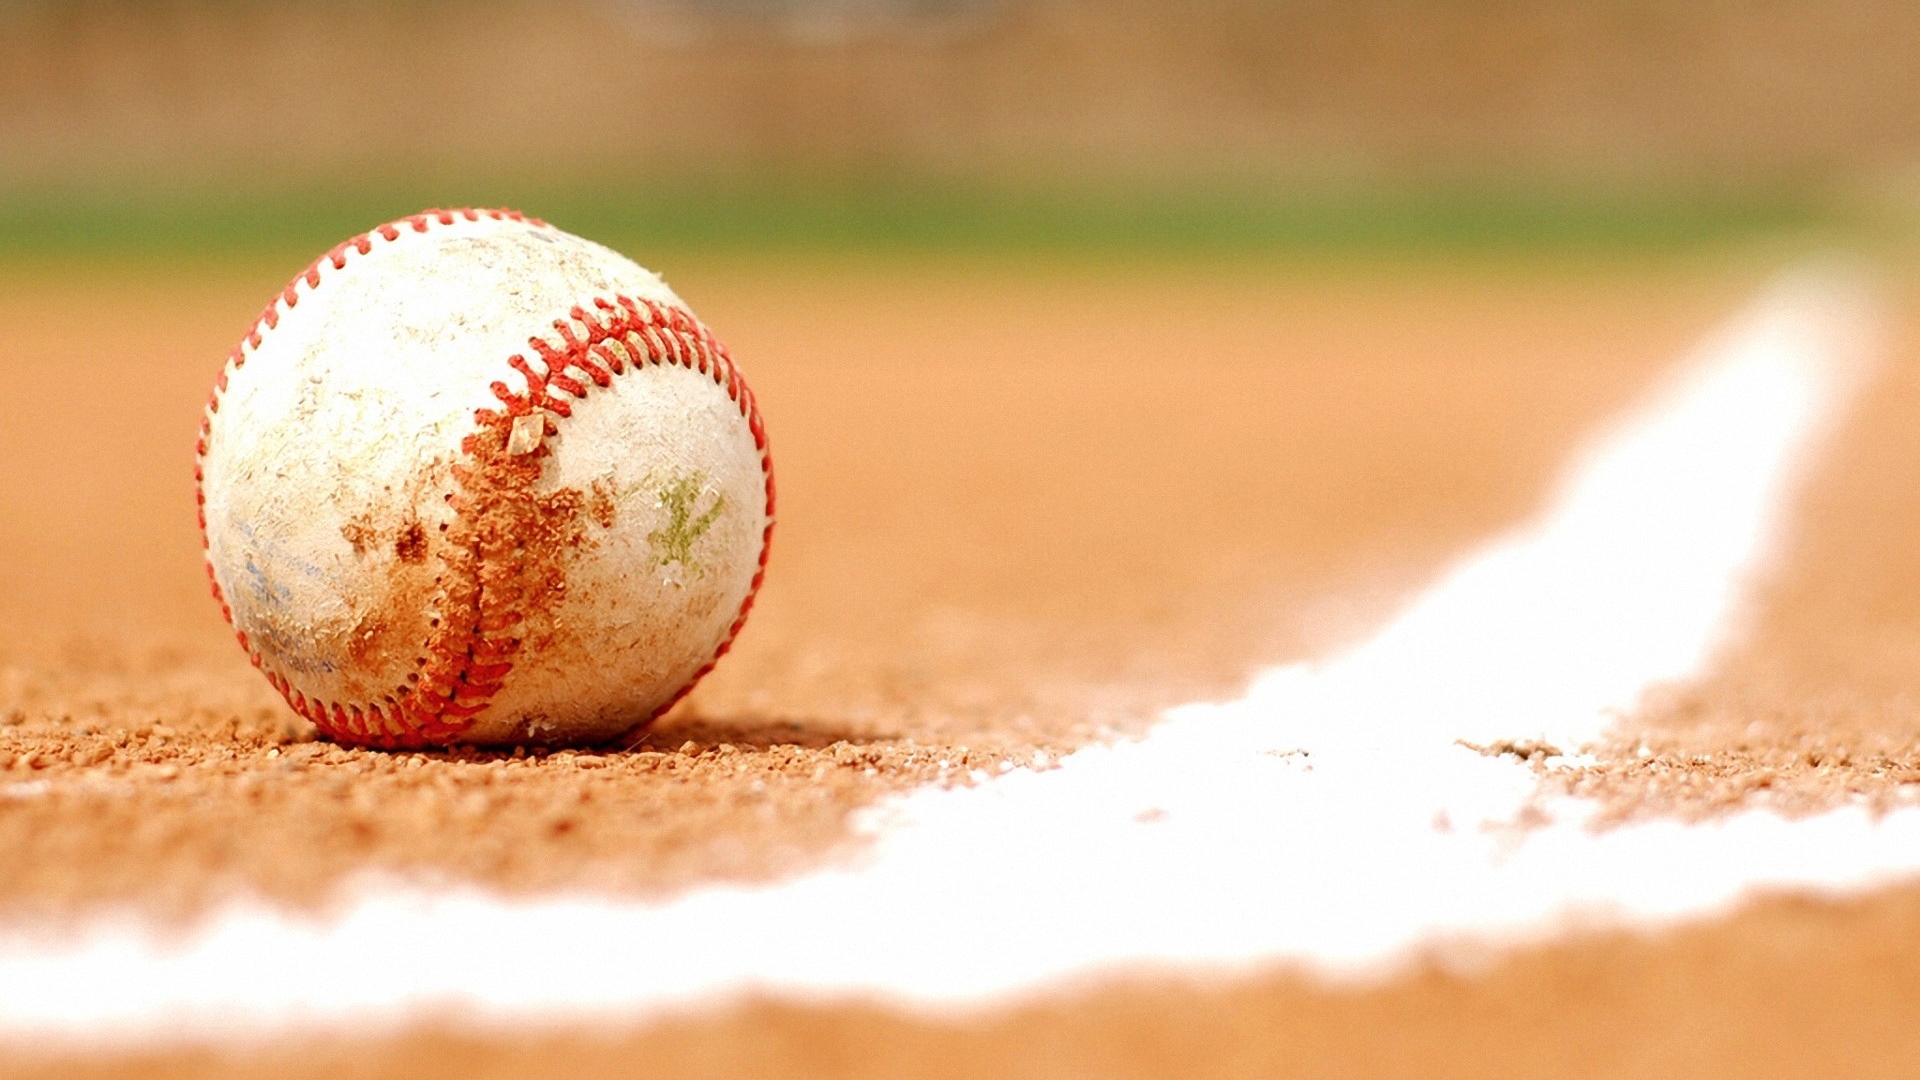 Baseball Desktop Wallpaper Image In Collection